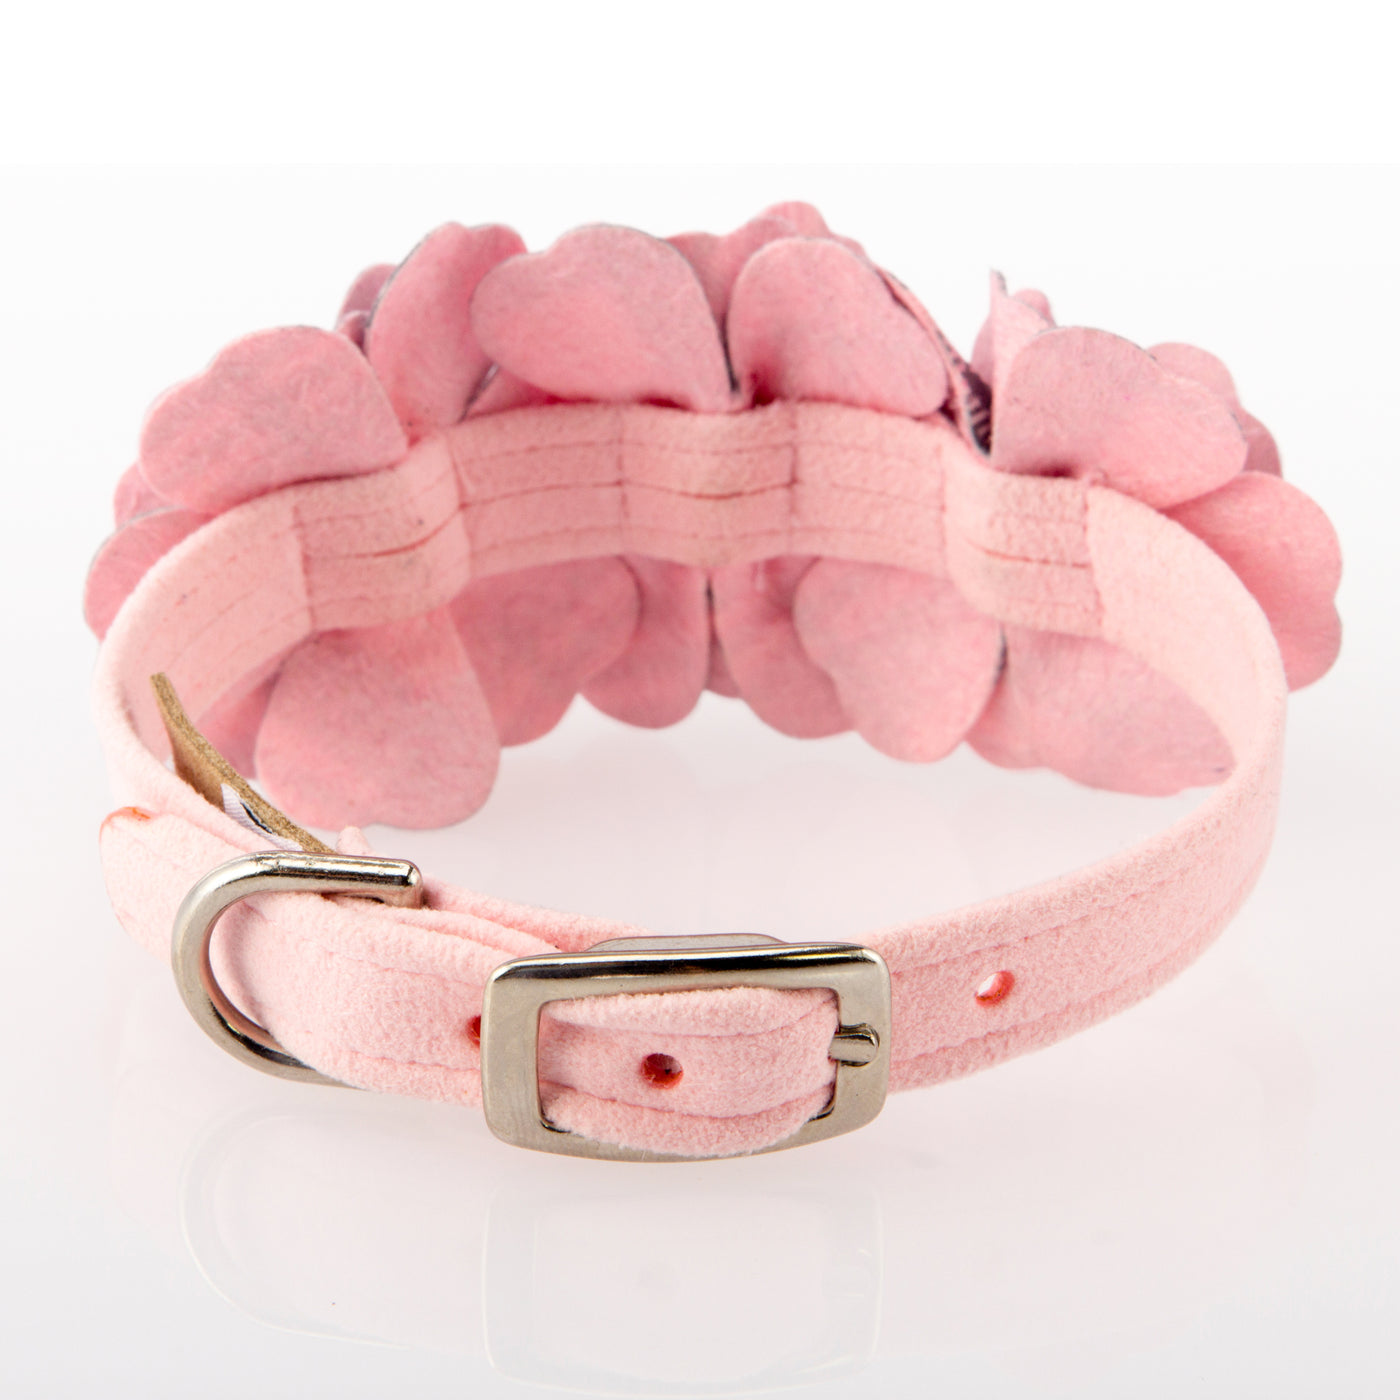 Scotty Collar Puppy Pink Plaid